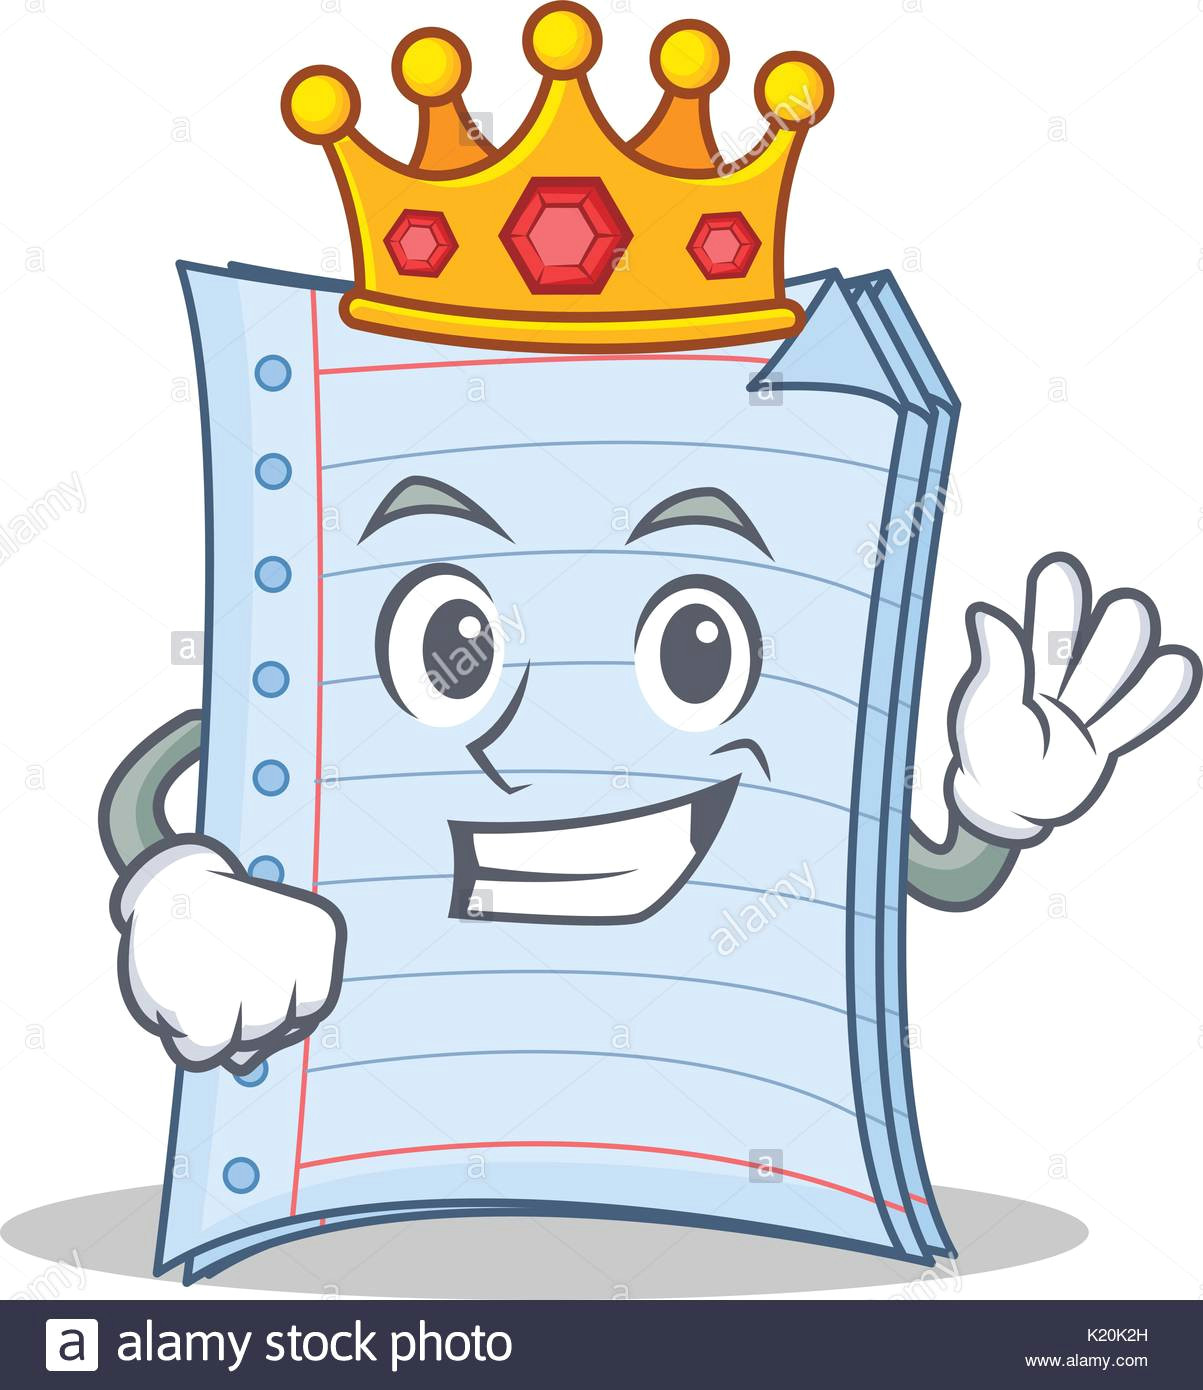 Cartoon Drawing Supplies King Notebook Character Cartoon Design Stock Vector Art